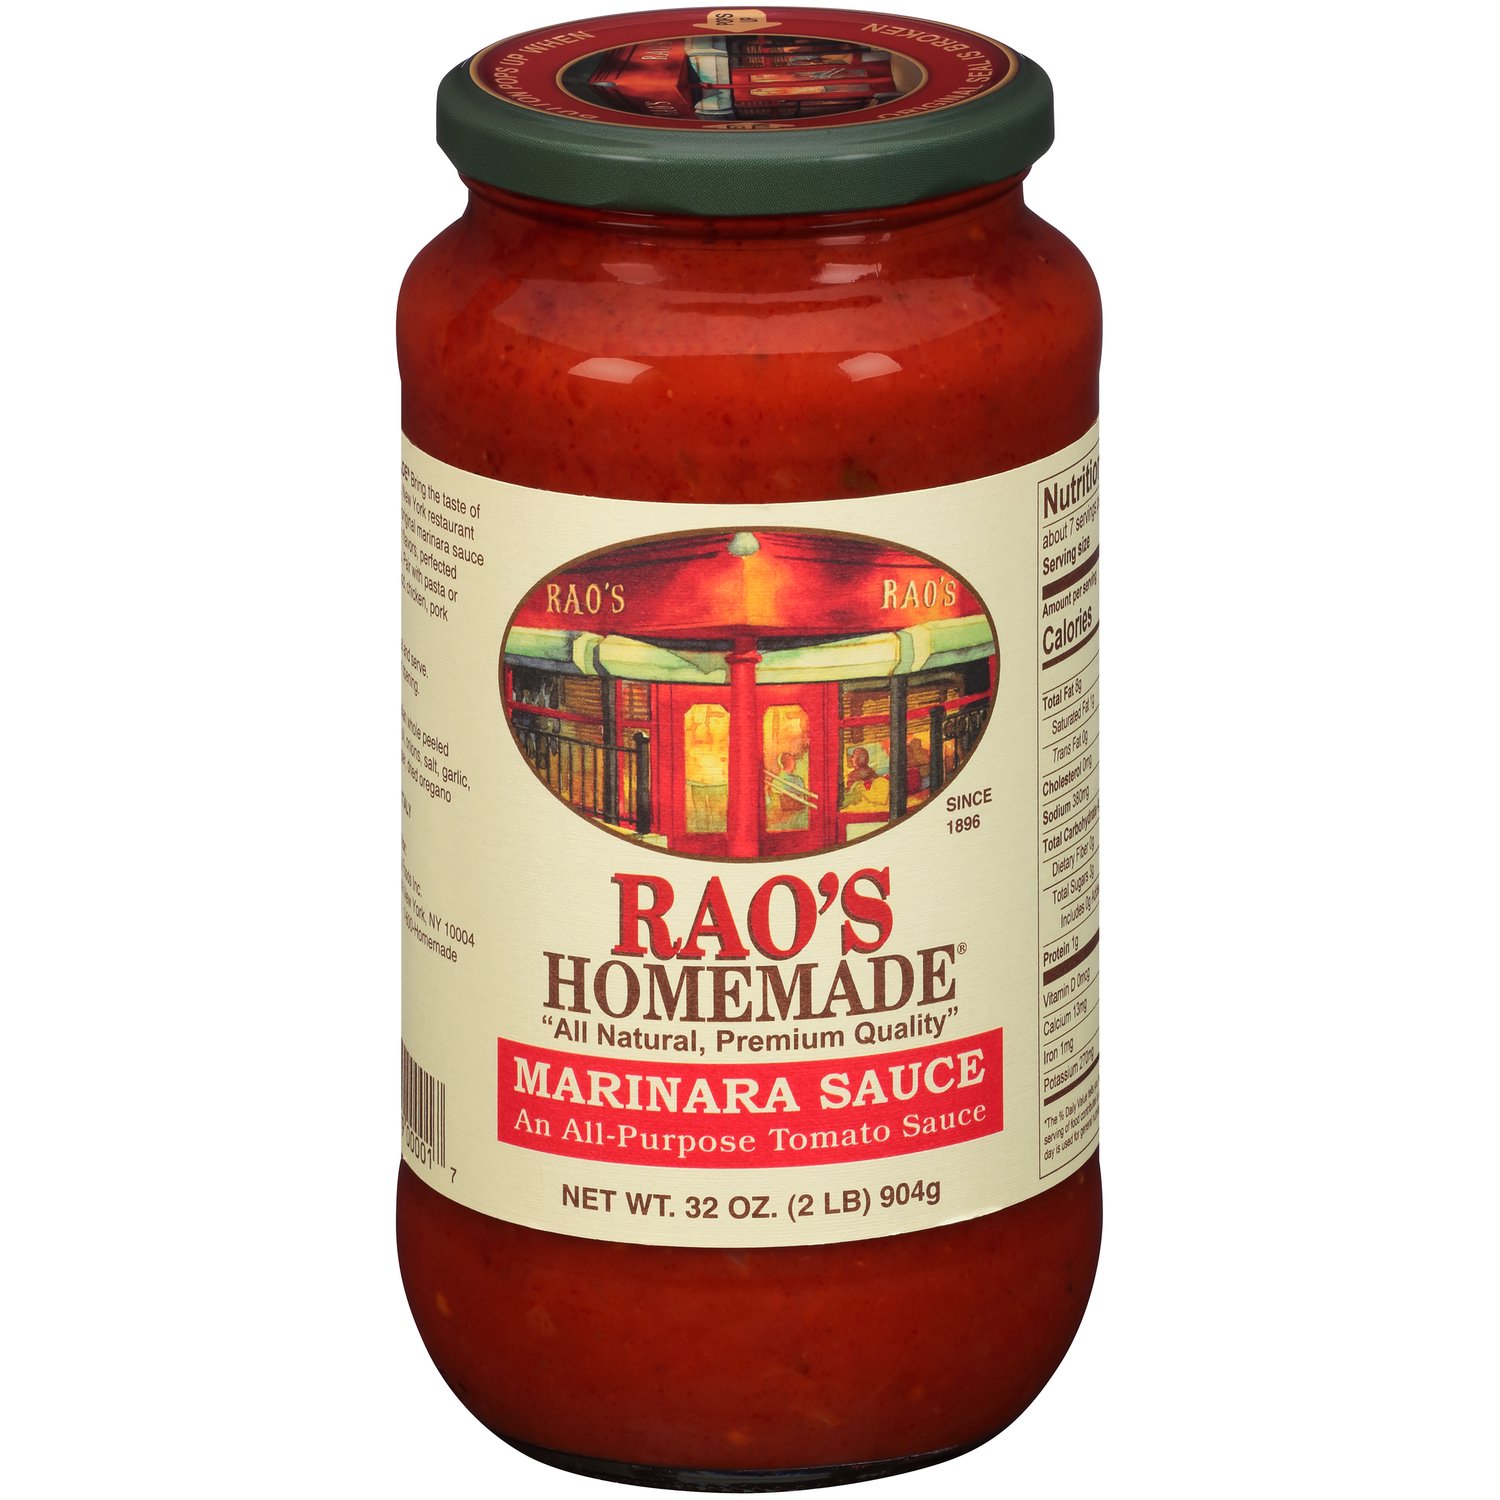 Raos Homemade Marinara Sauce, 32 oz